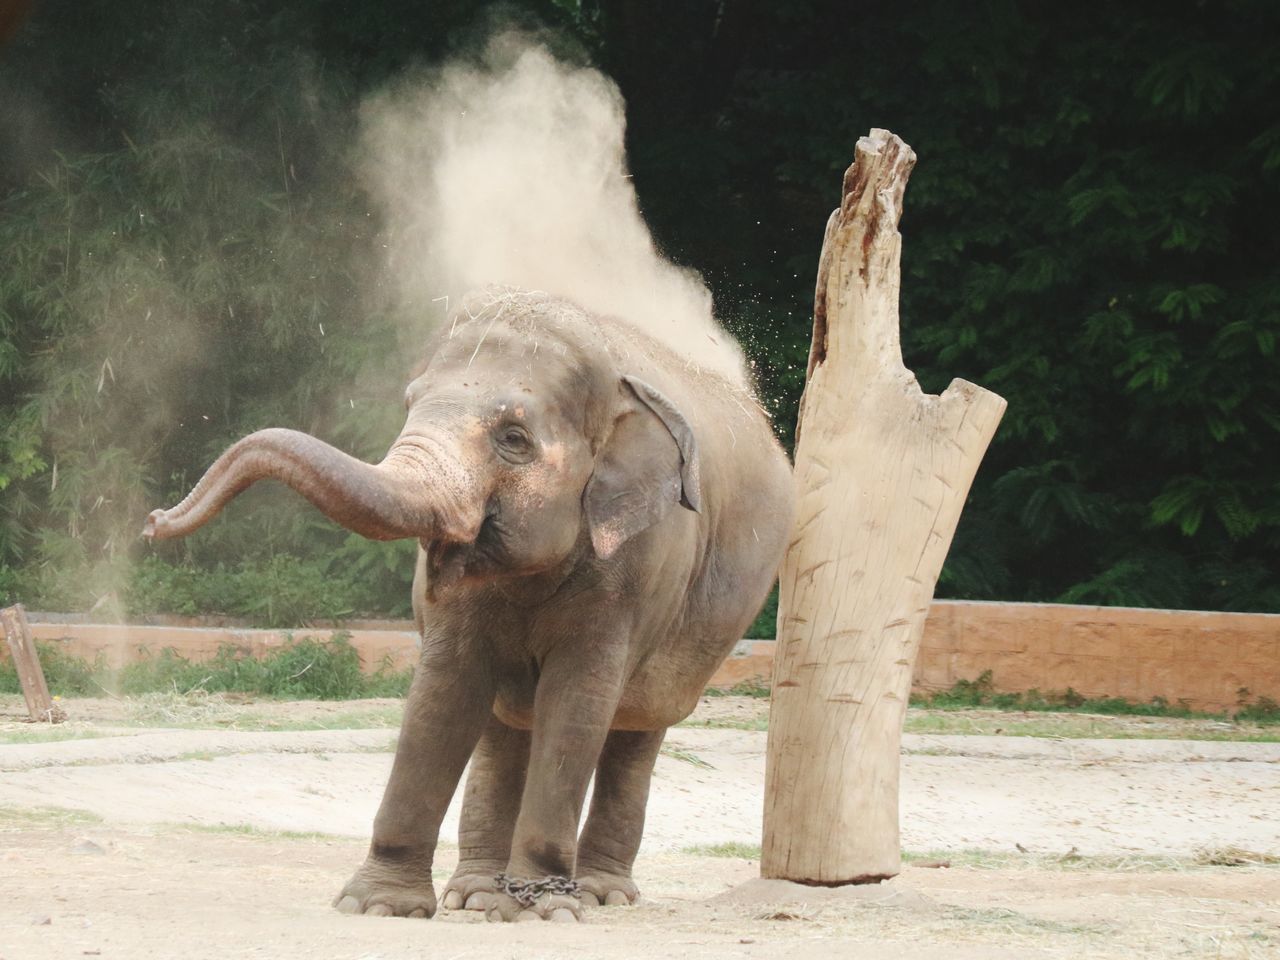 Baby elephants playjng